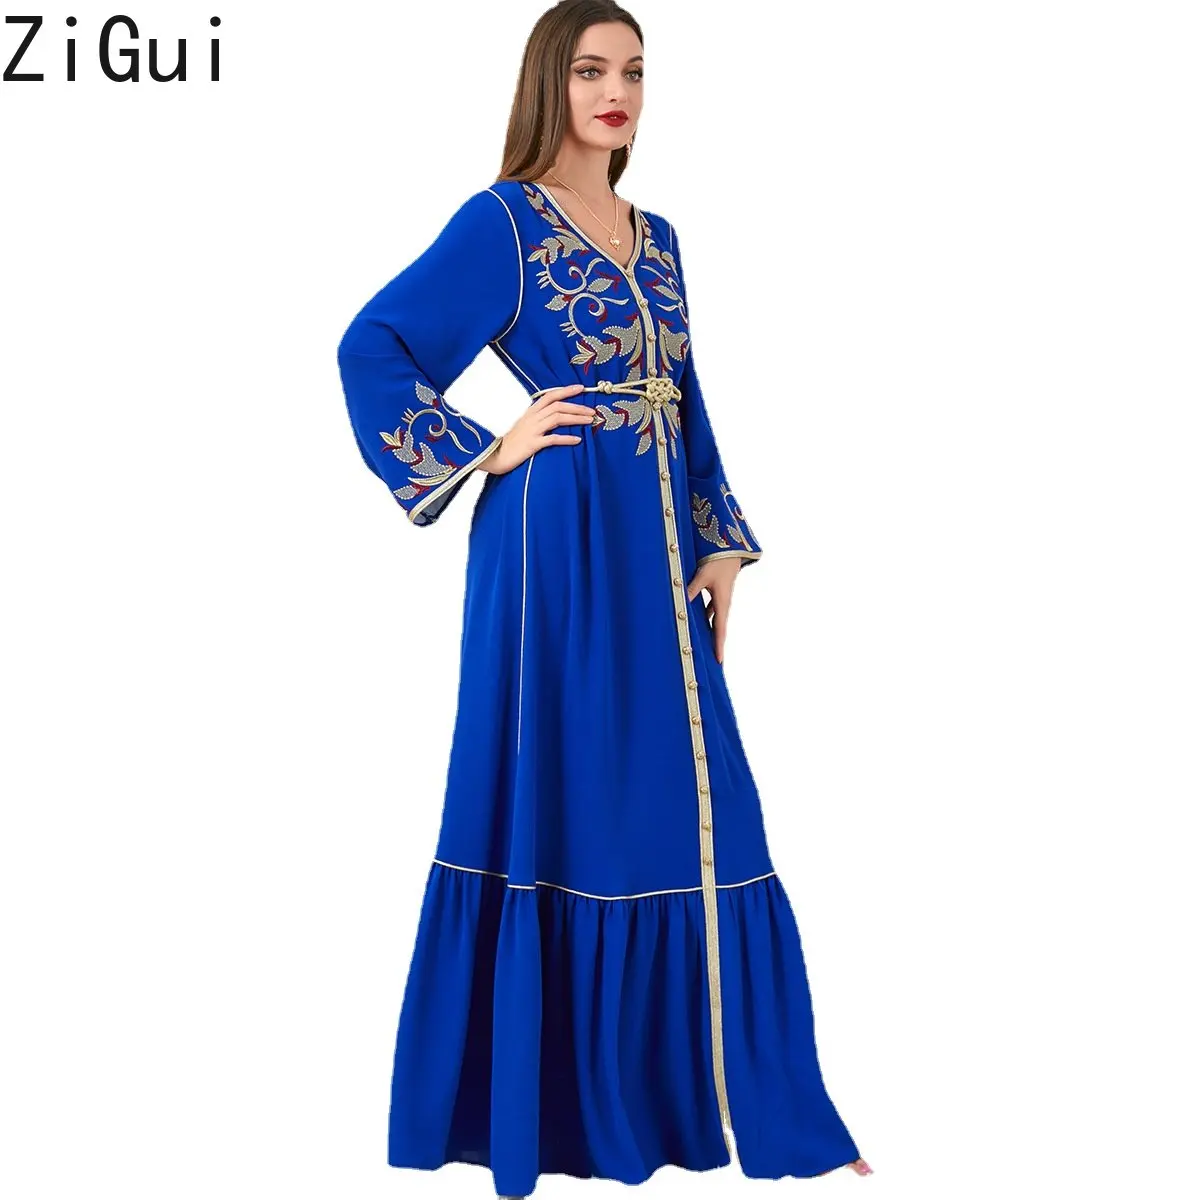 

Zigui Elegant Luxury Evening Dress Blue Long Sleeve Gold Embroidery V Neck Belted Muslim Abaya Dress Dubai Ramadan